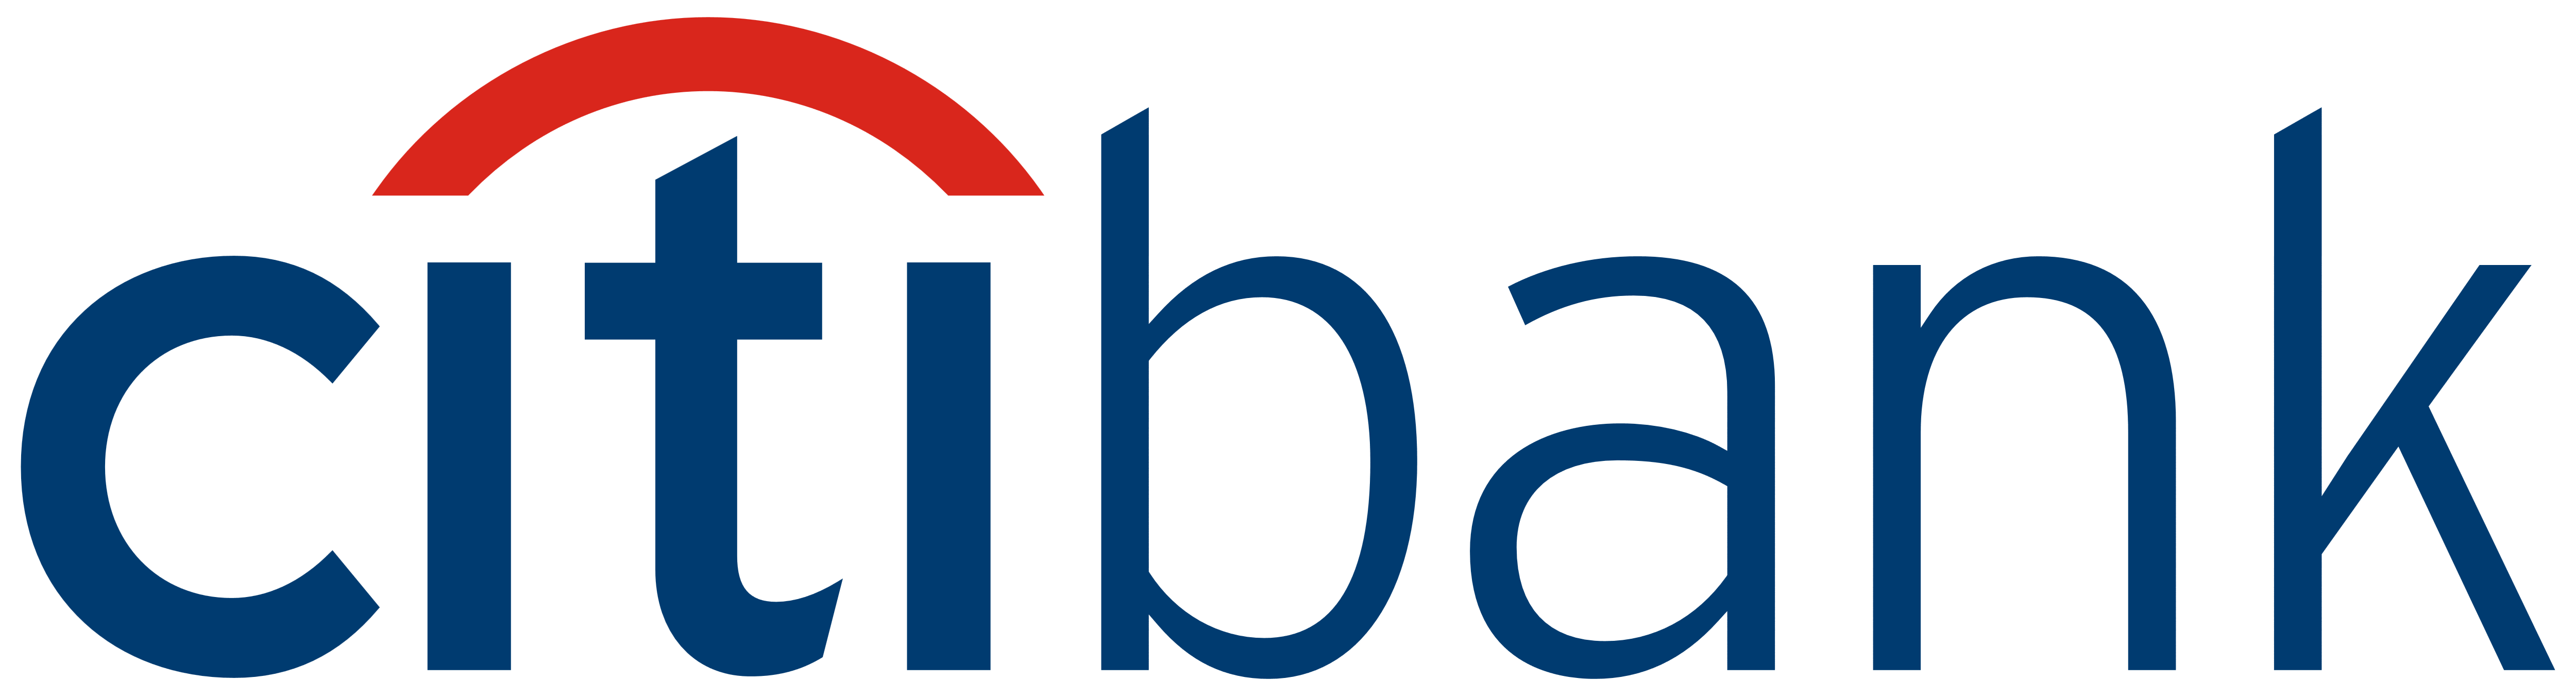 Citibank Logo - Citibank, Citi – Logos Download